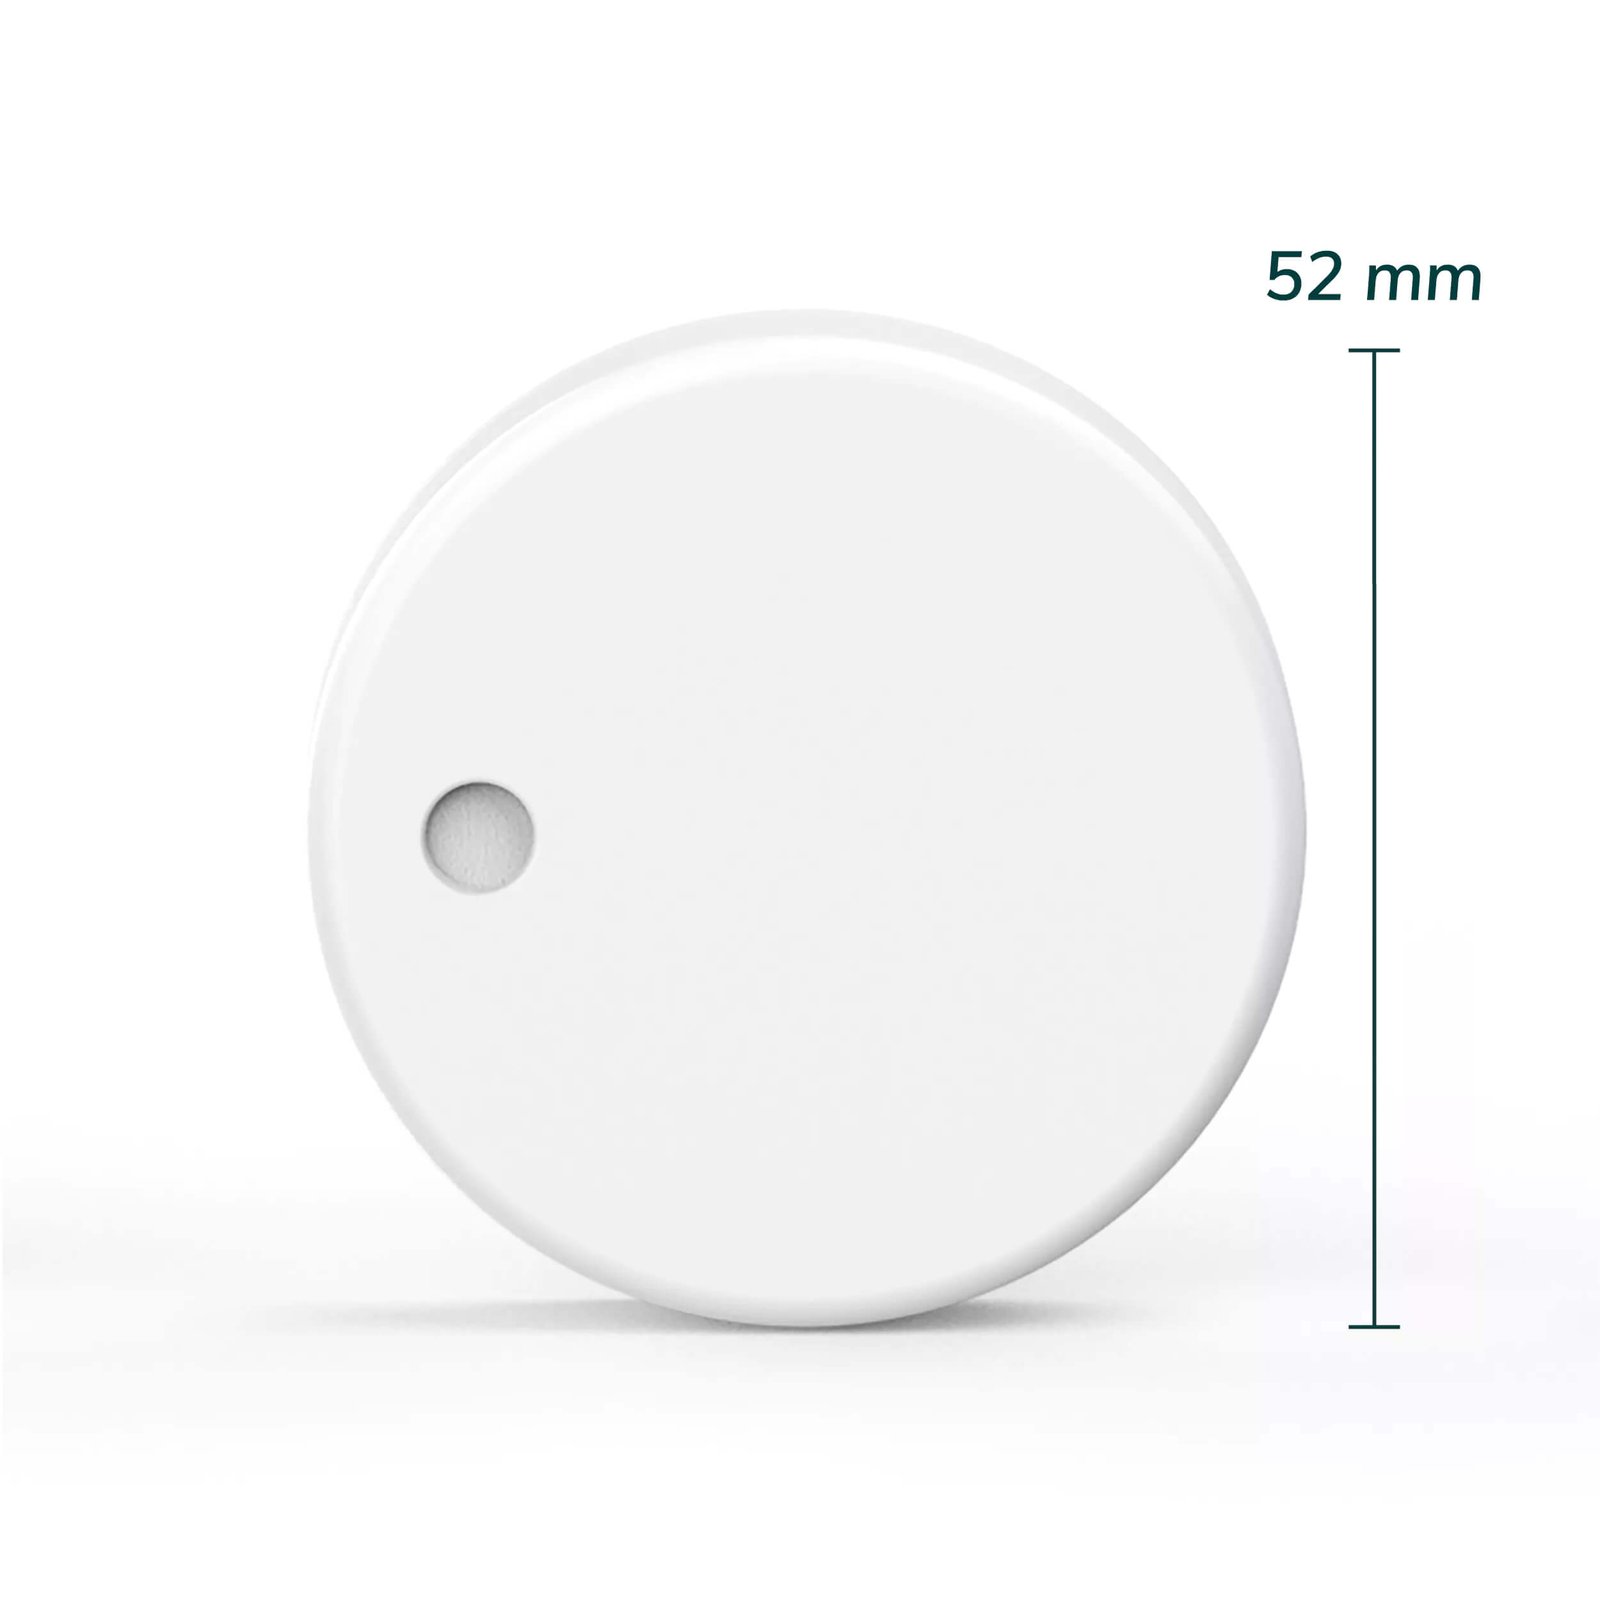 ruuvitag ruuvi tag 4 in 1 temperature humidity motion acceleration air pressure sensor dimensions size